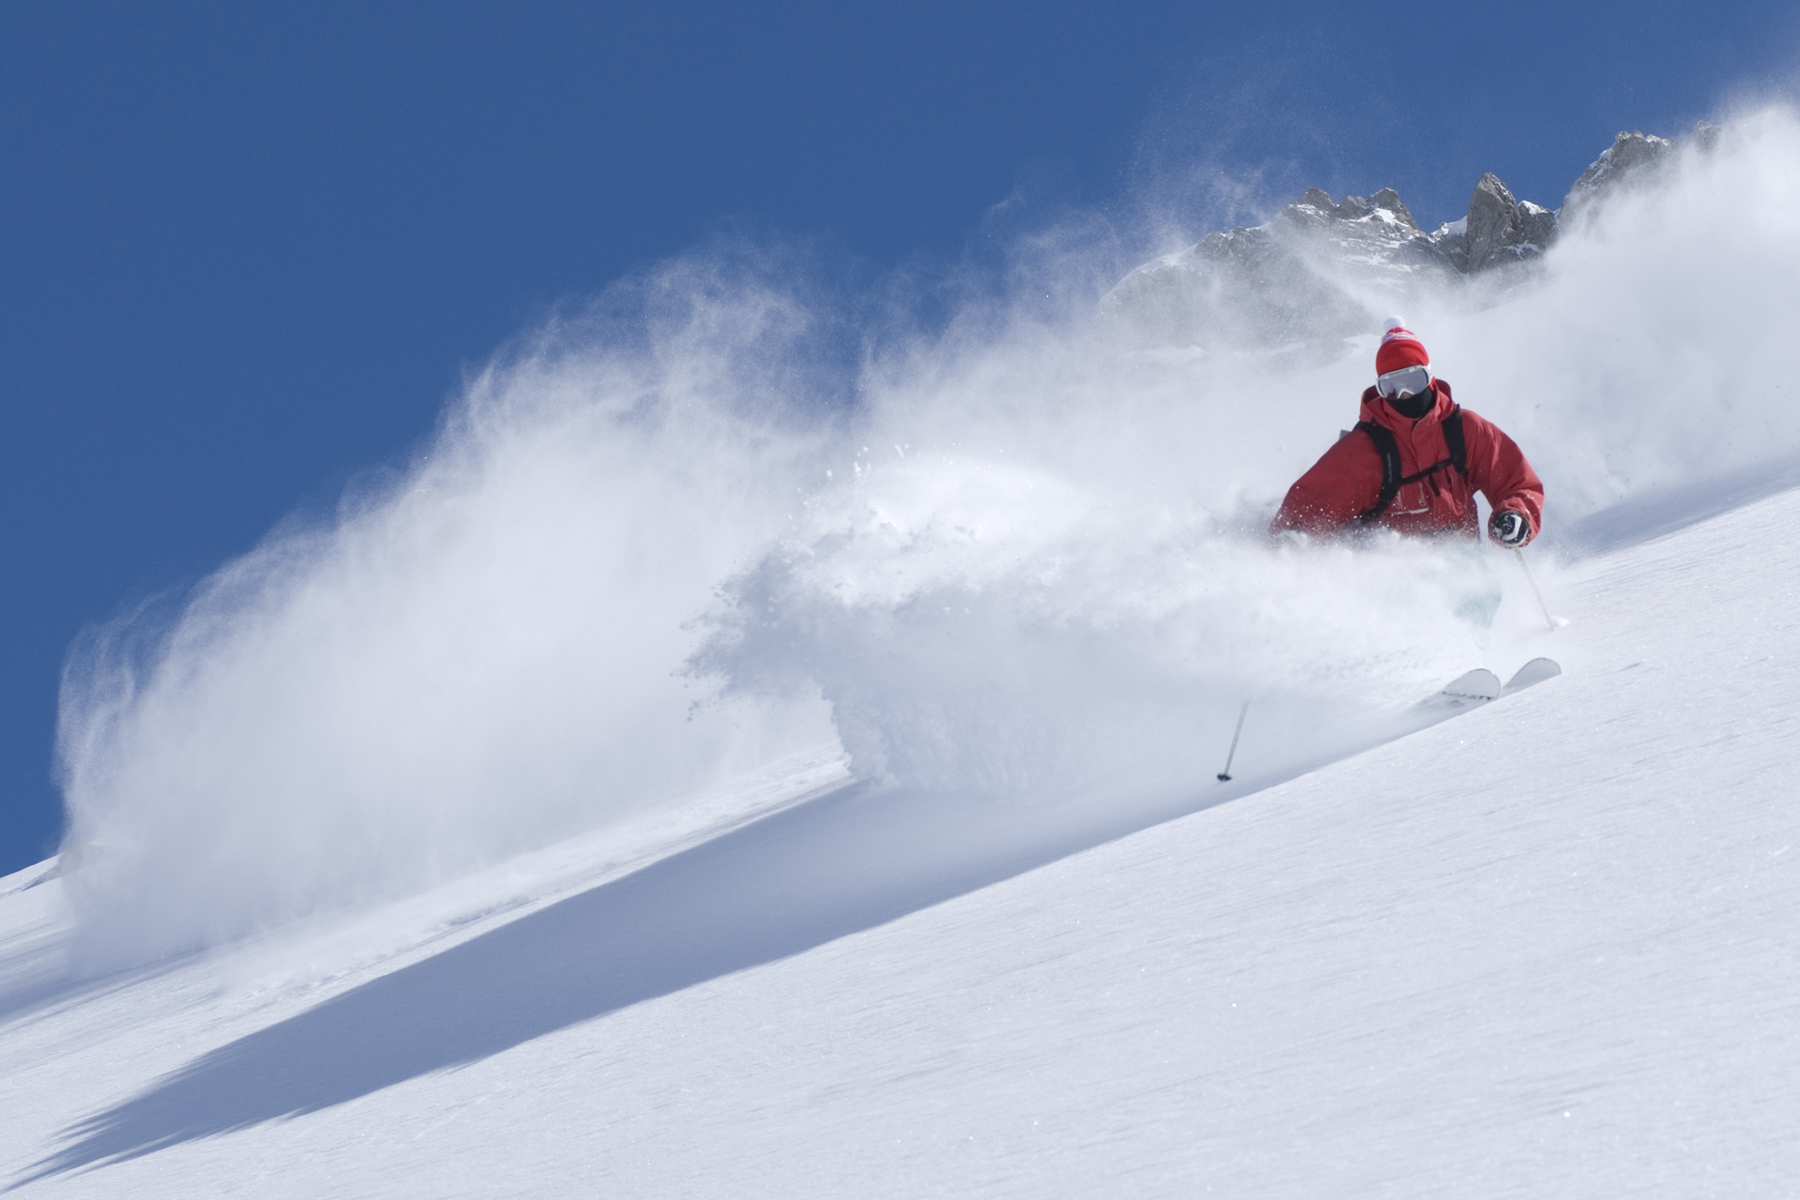 Rockered skis and snowboards make hitting the slopes easier for